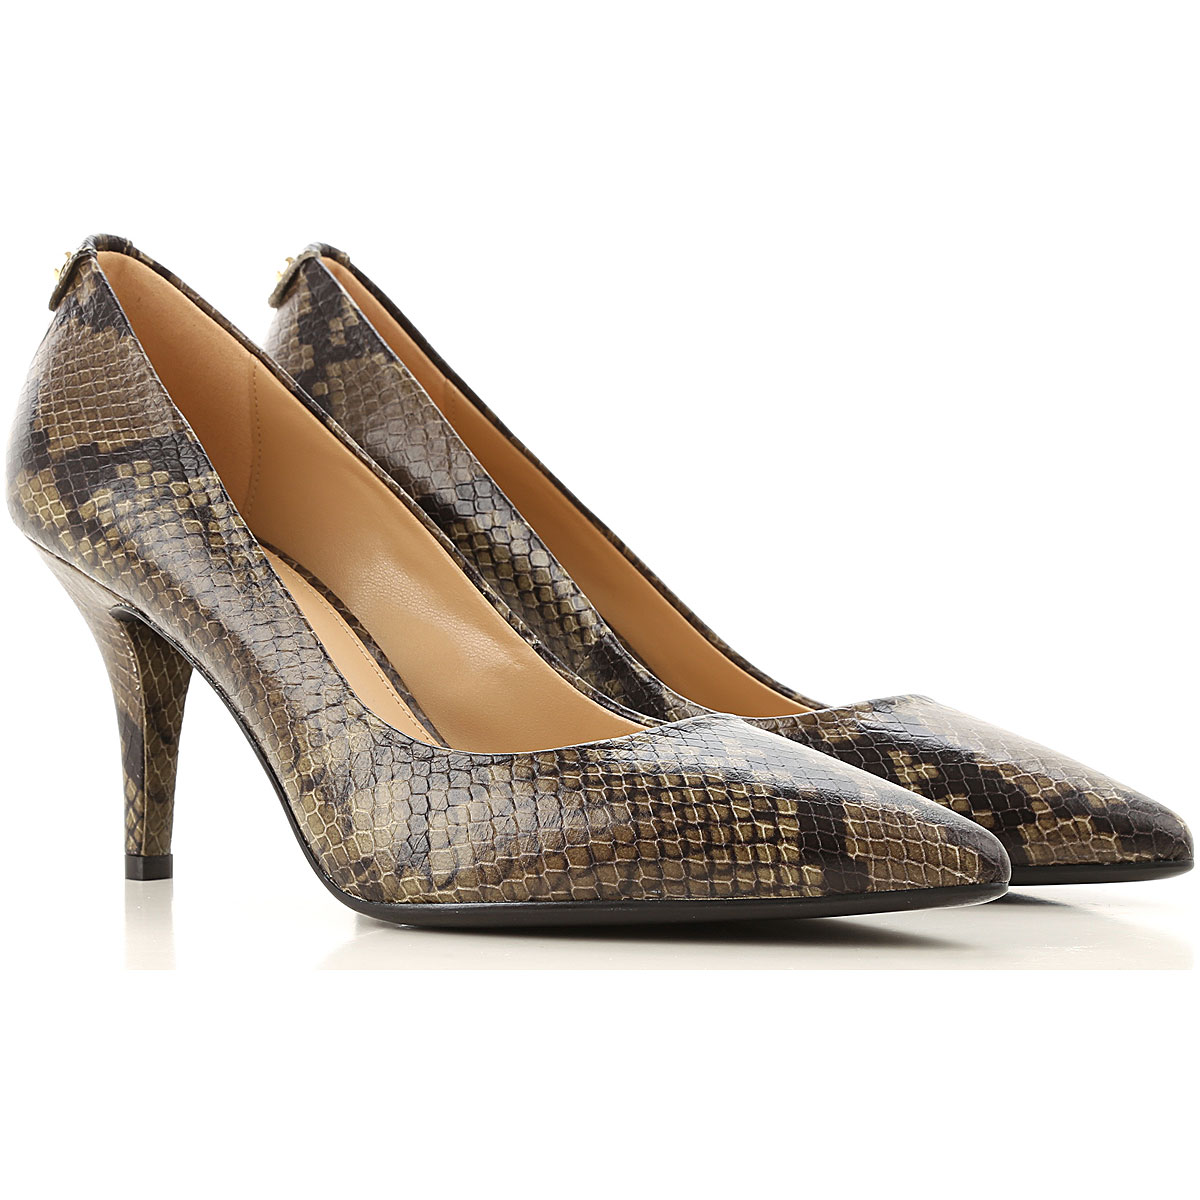 Womens Shoes Michael Kors, Style code: 40t5mfmp3e-olive-